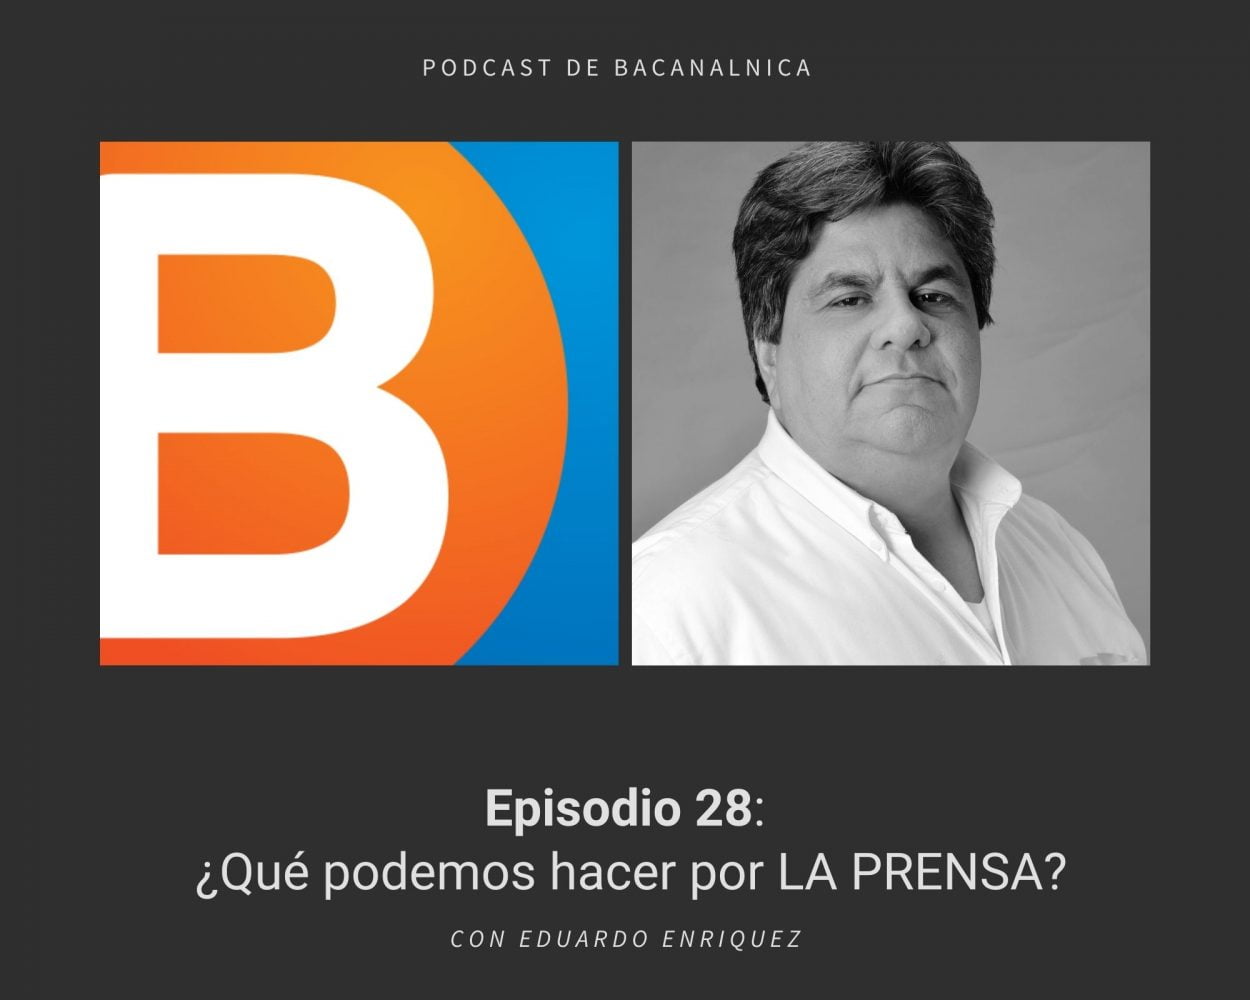 Episodio 28 del podcast de Bacanalnica, con Eduardo Enriquez